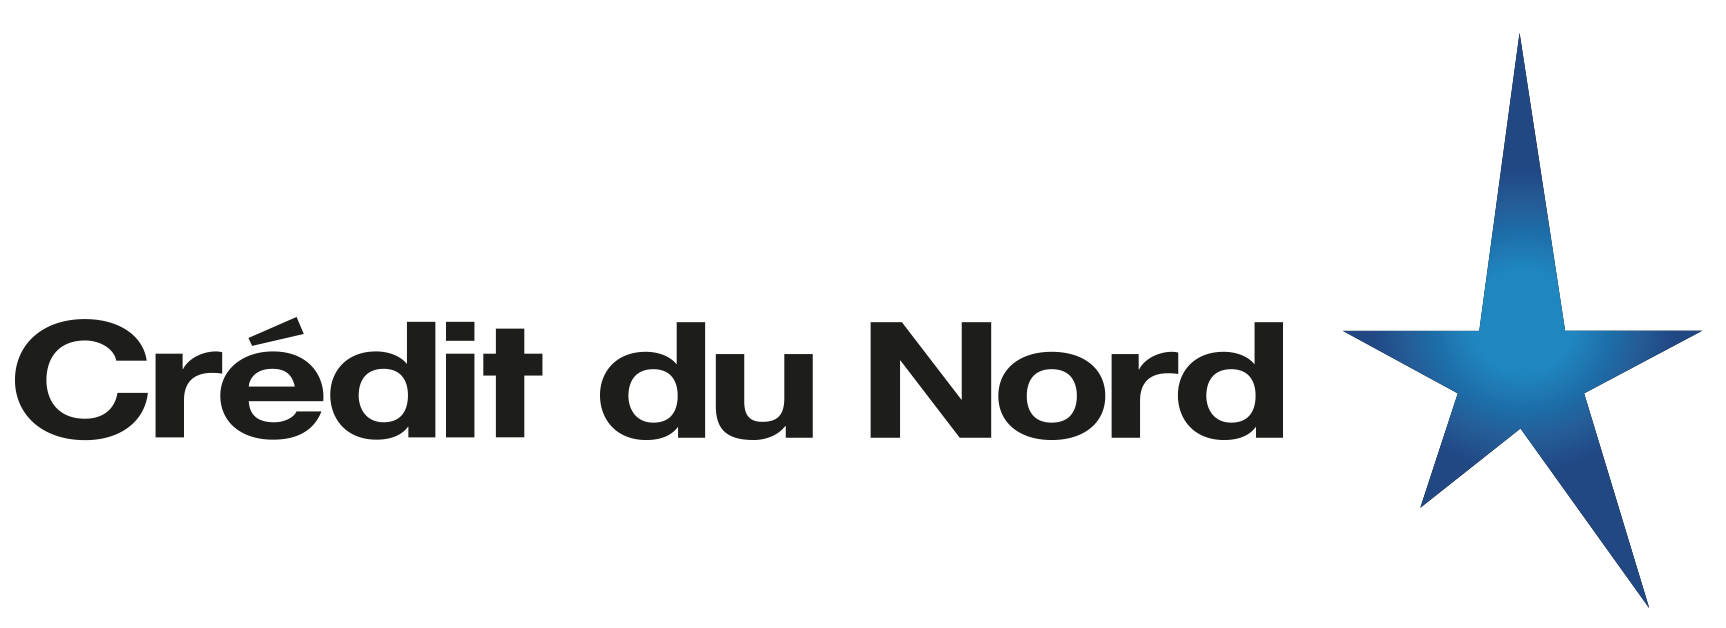 Дю норд. Du Nord. Nord svg. Nord логотип. Логотип Nord oli.